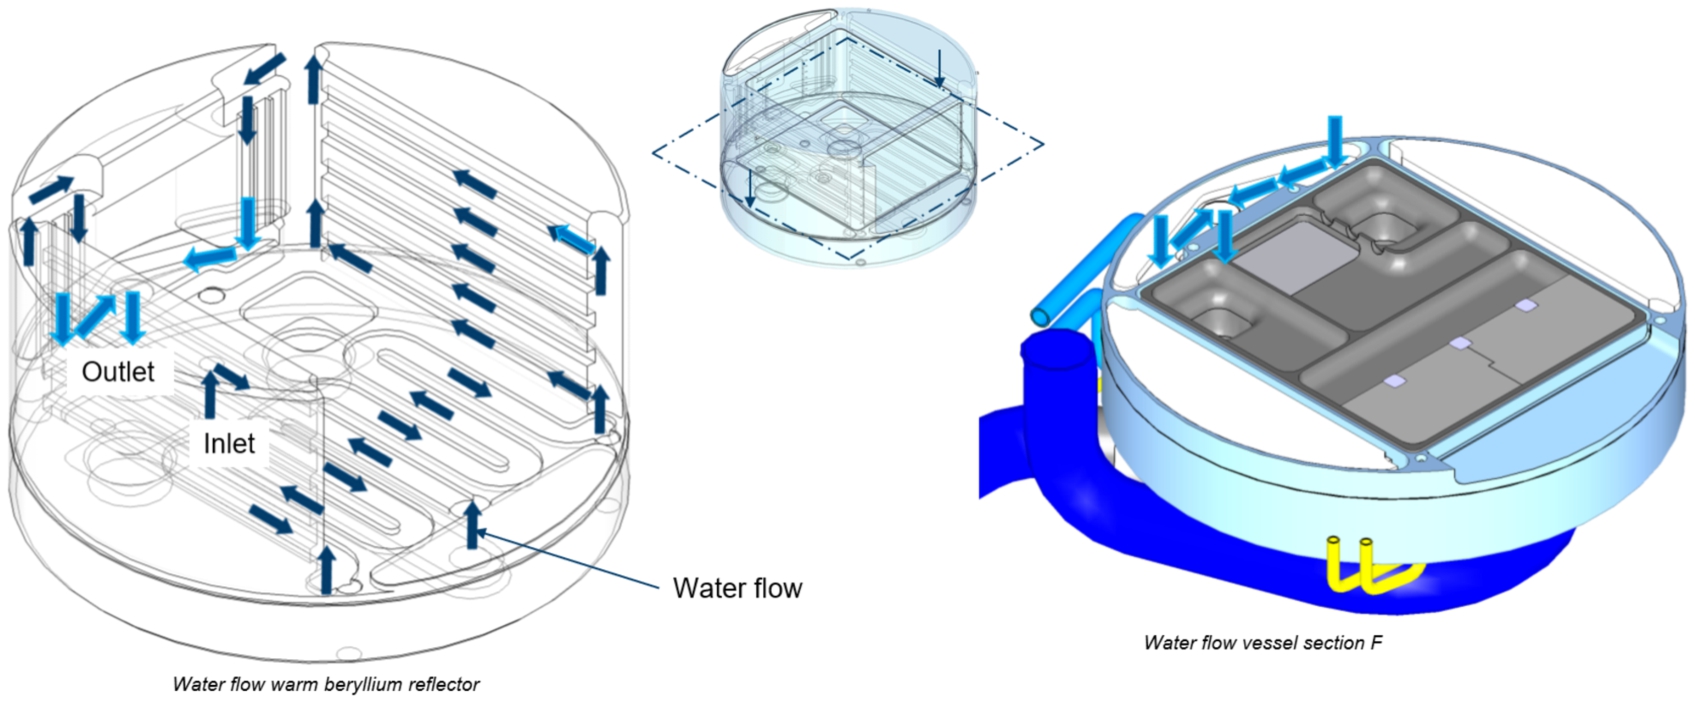 Flow pattern of water through the warm beryllium reflector parts.